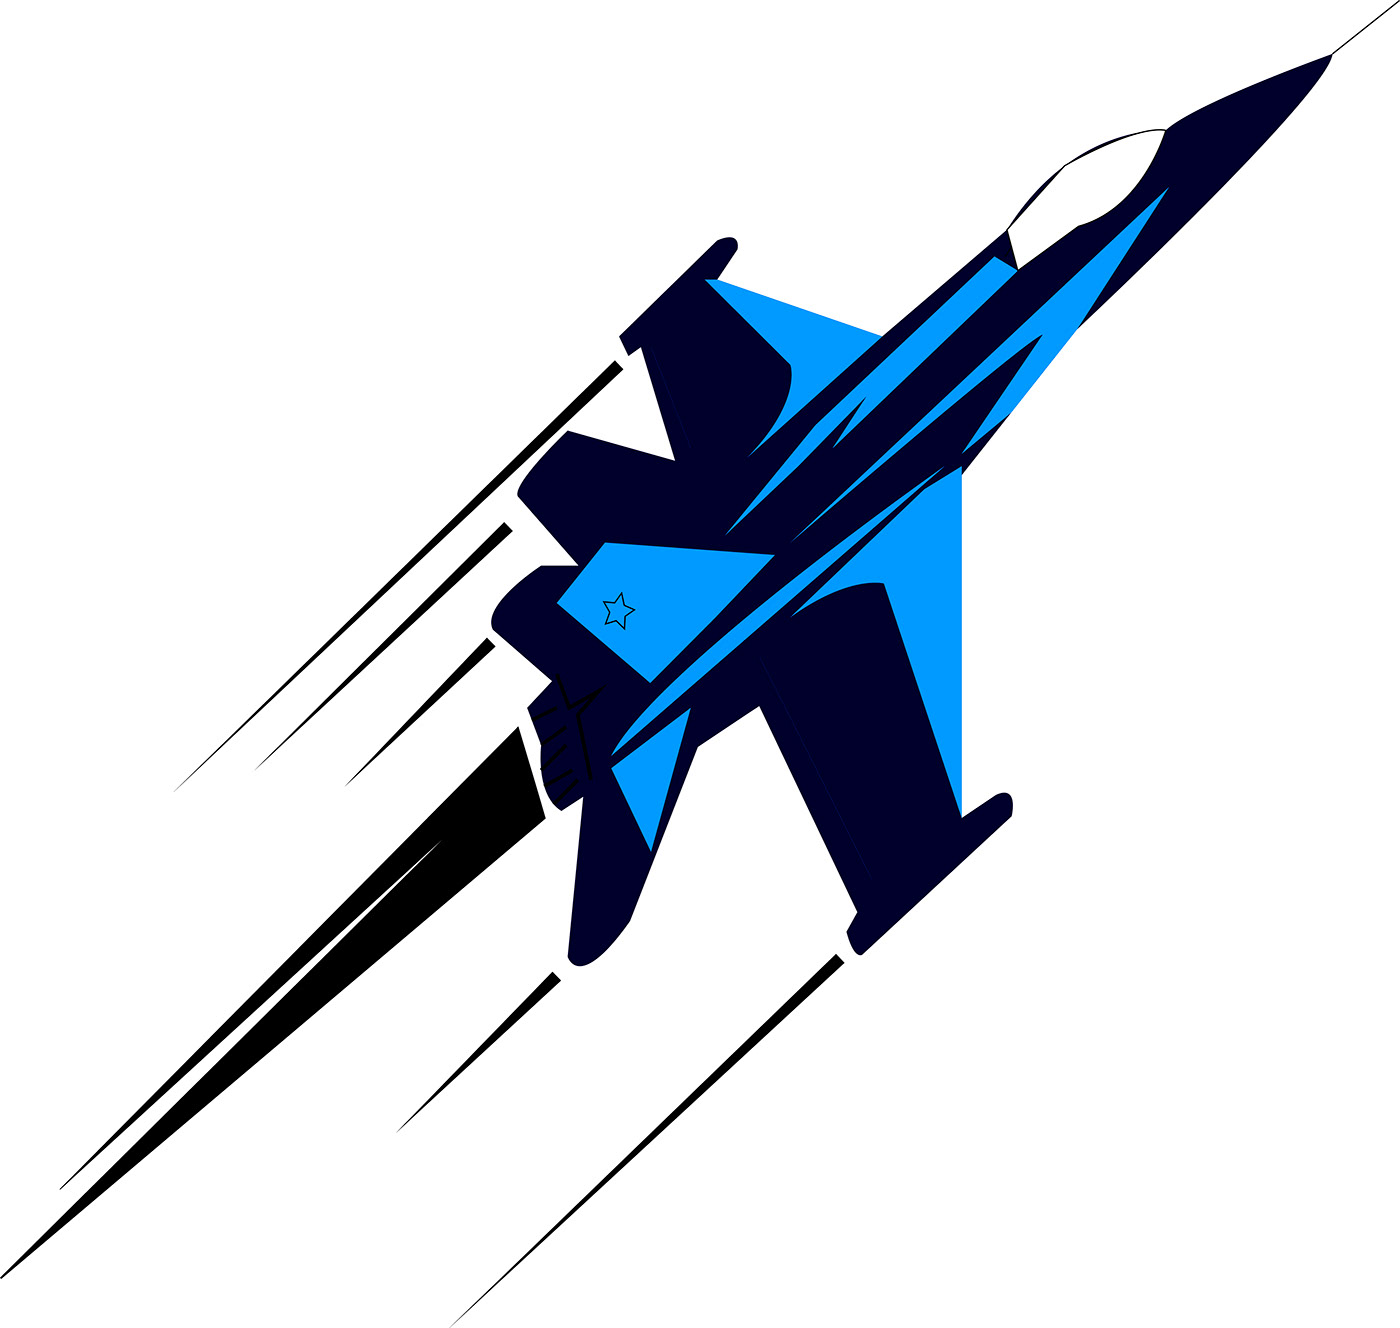 I sketch a war jet .